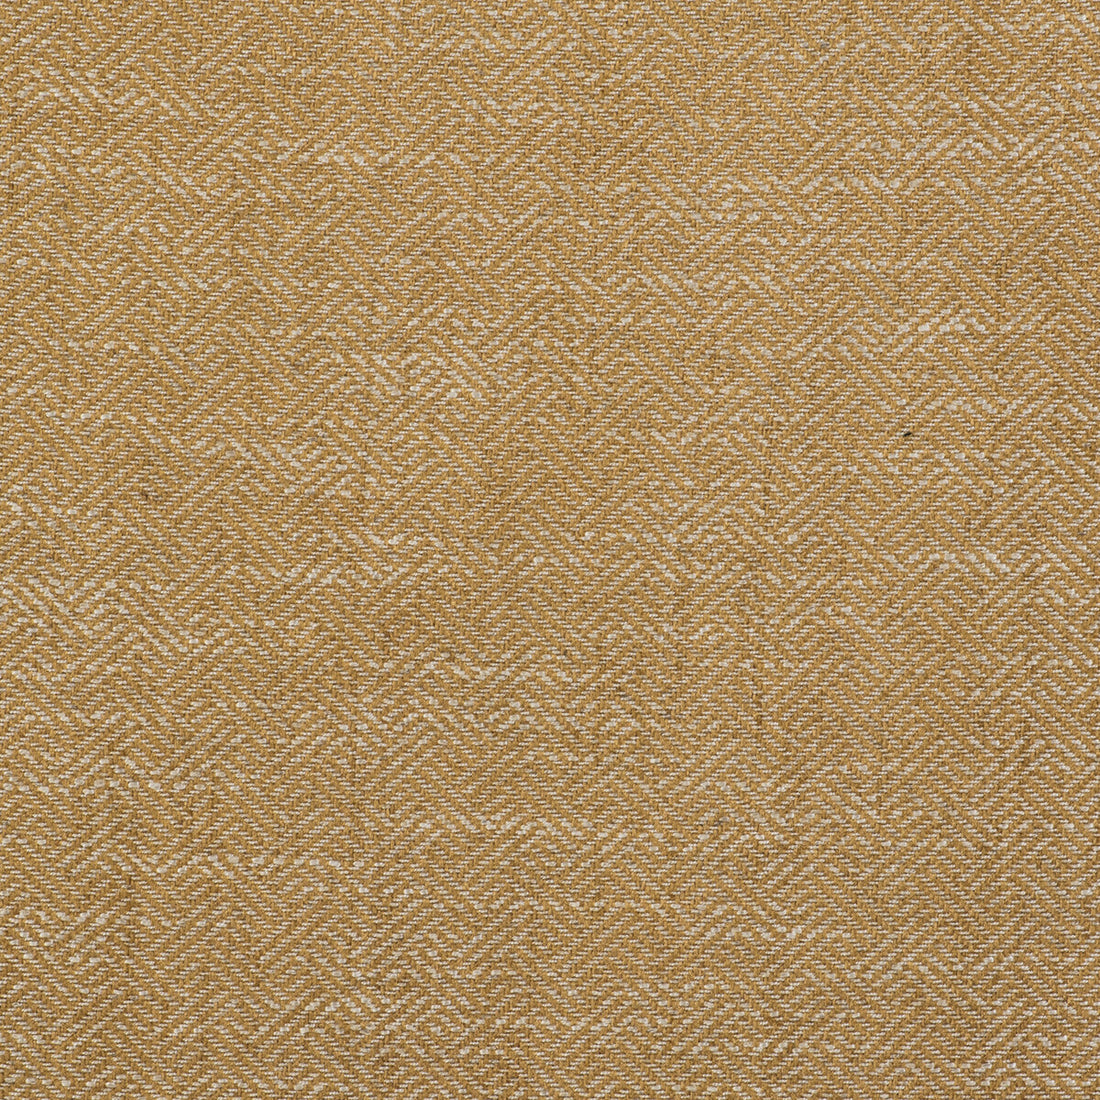 Enea fabric in oro color - pattern GDT5518.005.0 - by Gaston y Daniela in the Gaston Libreria collection